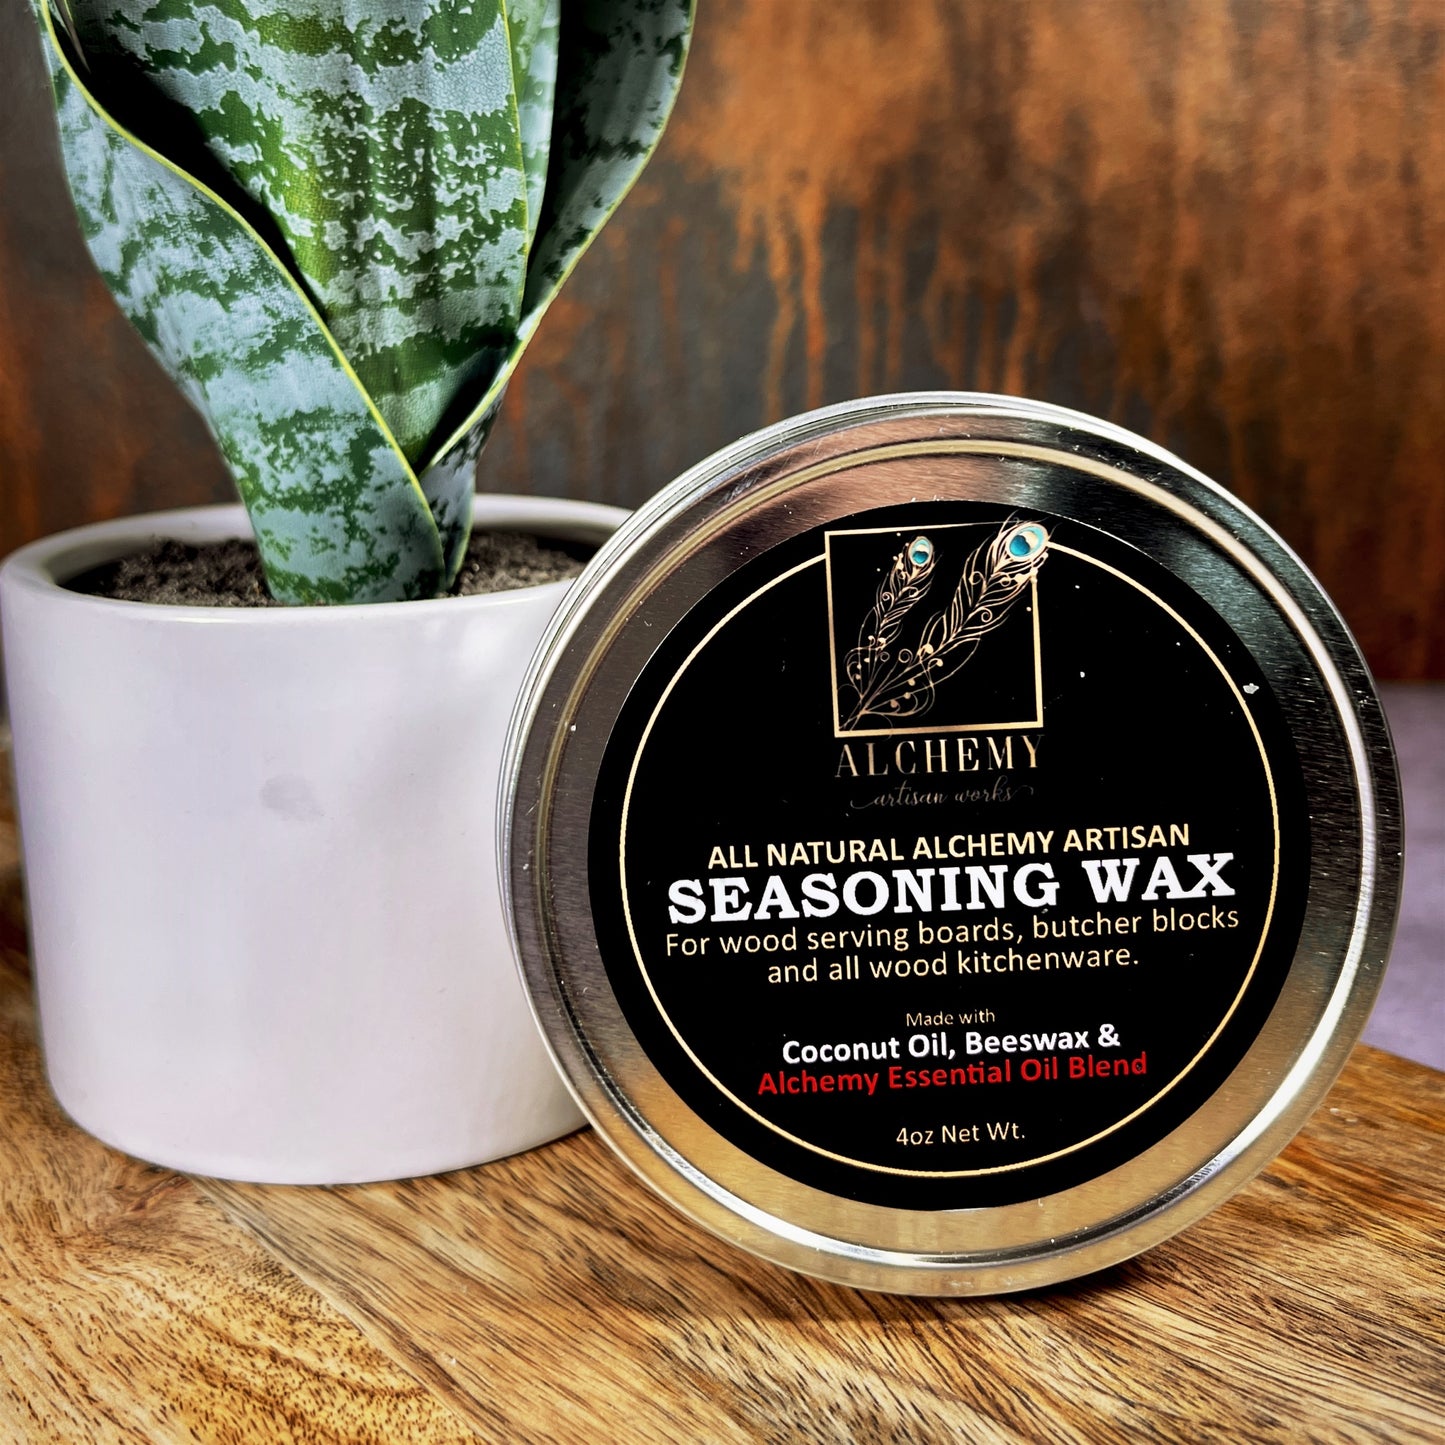 Alchemy Artisan Seasoning Wax - 4 oz